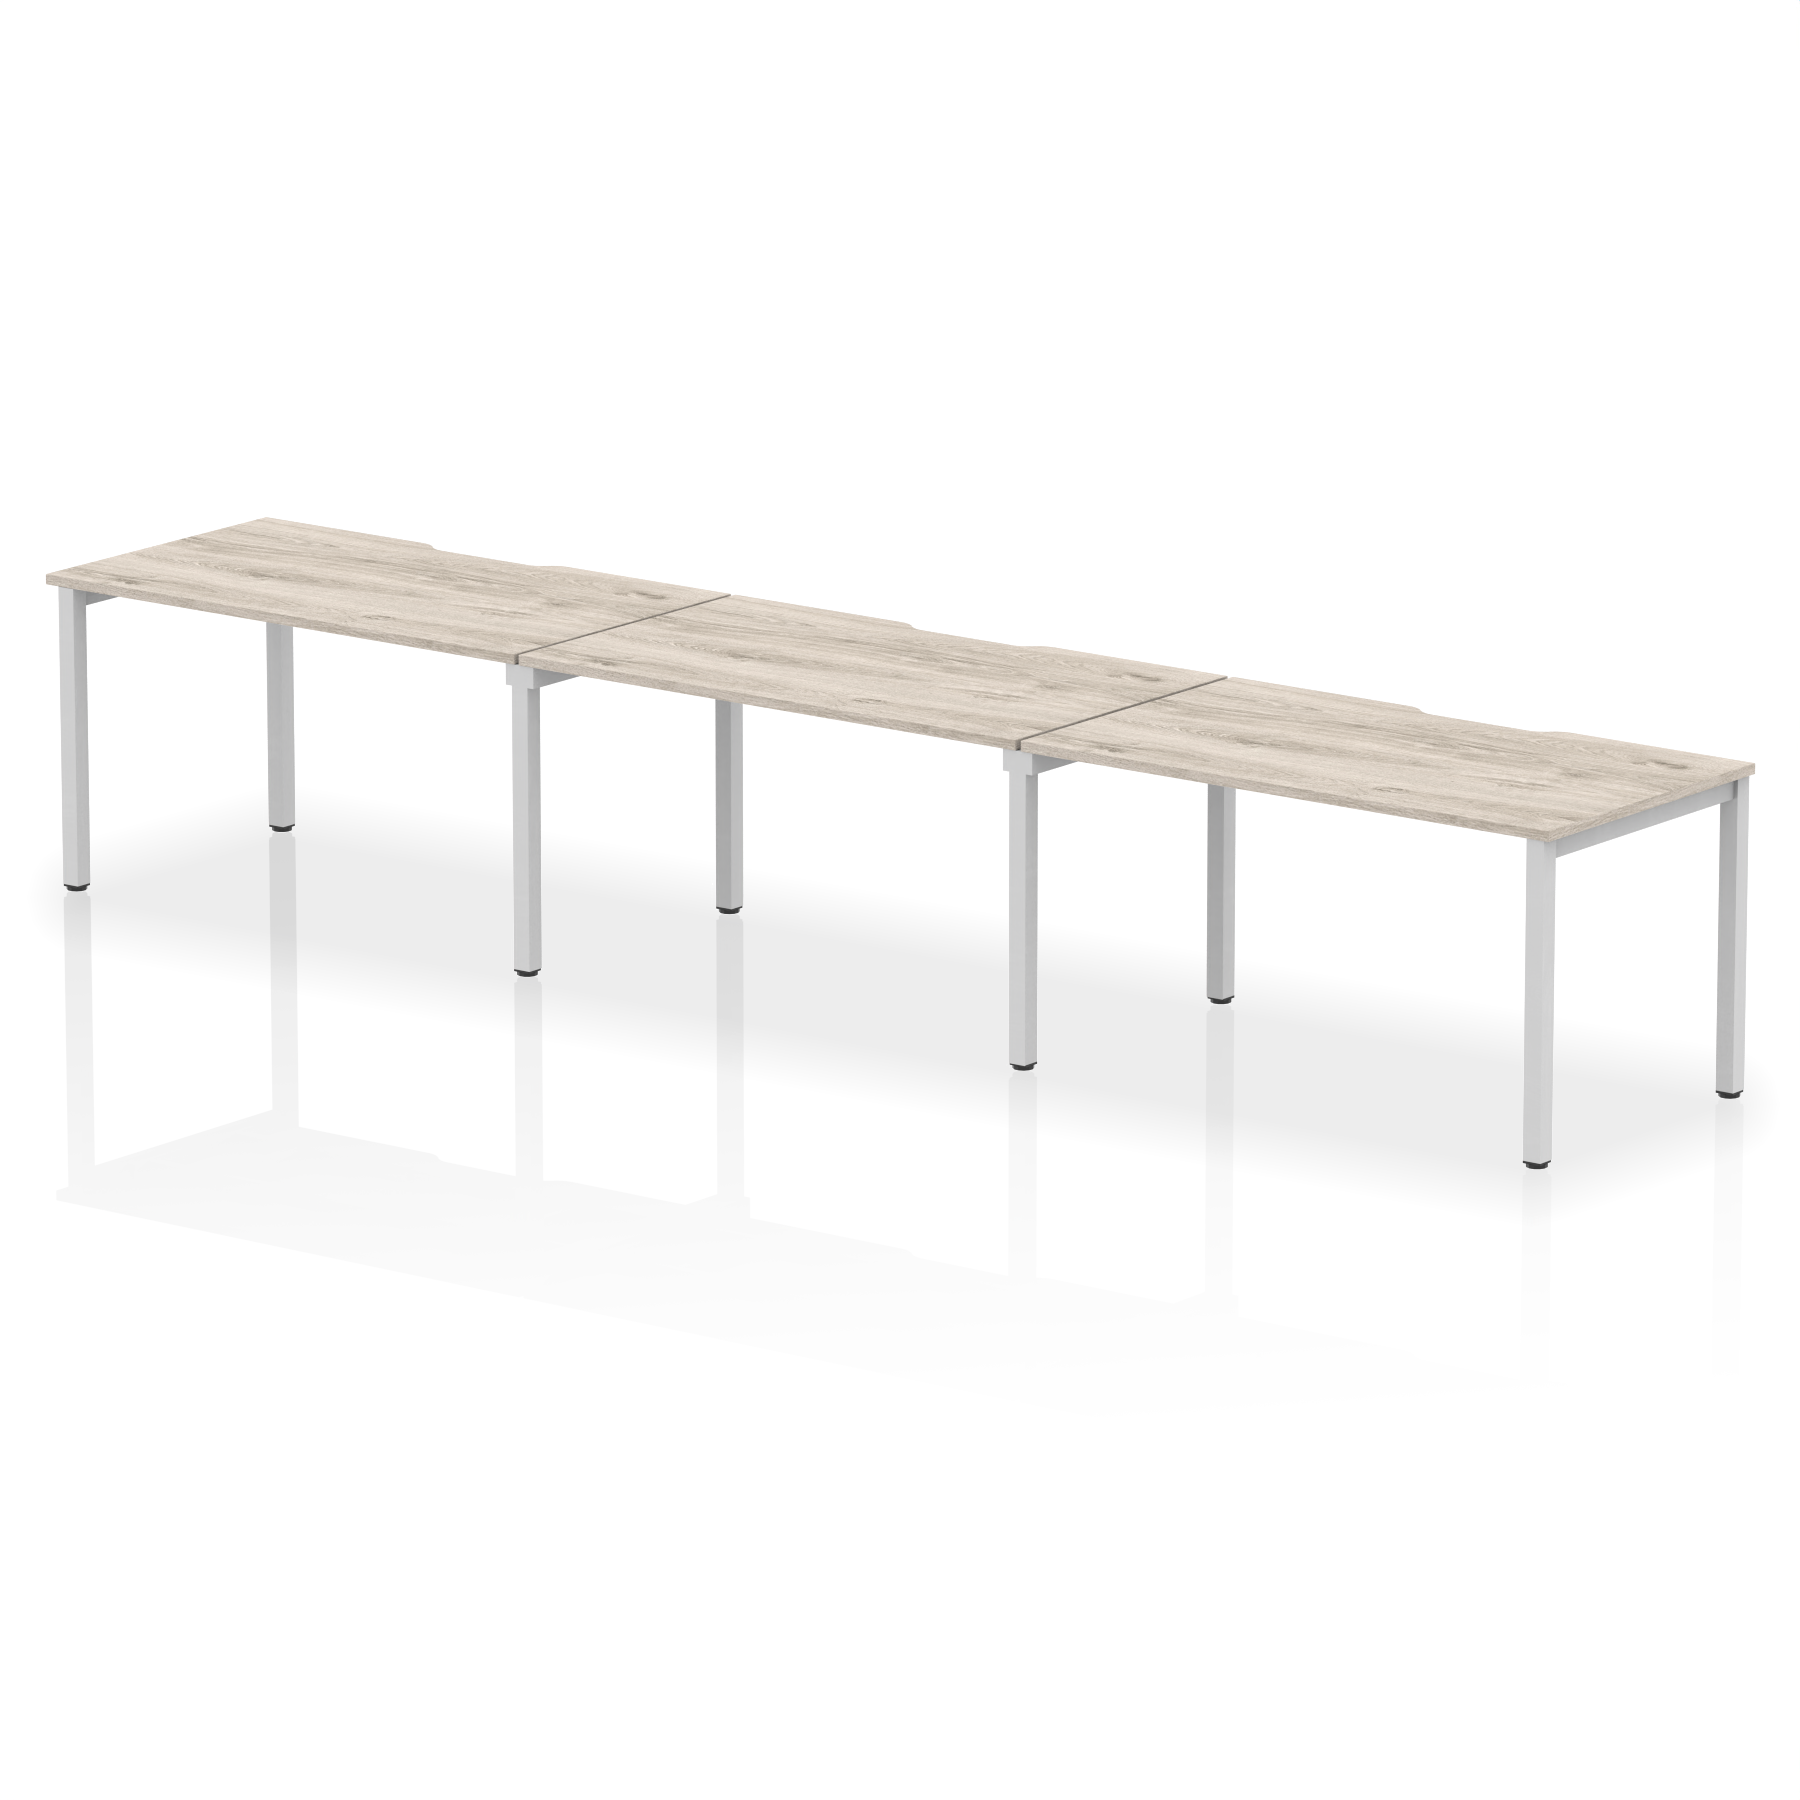 Evolve Plus Single Row Bench Desk - 3 Person